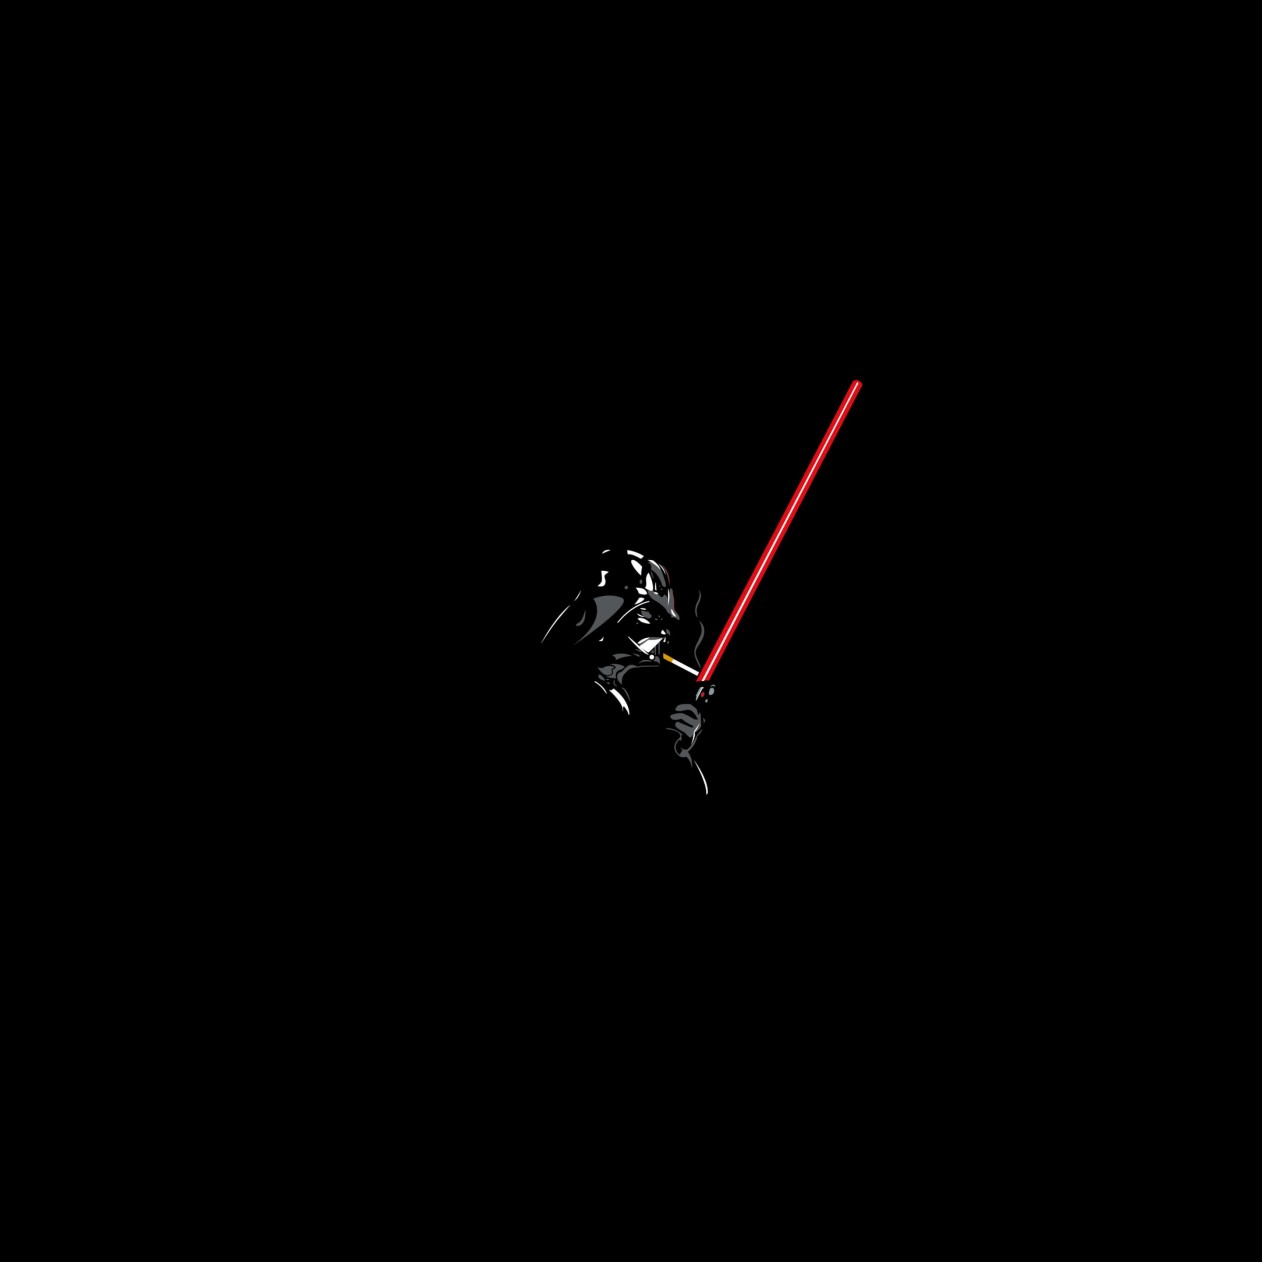 Darth Vader Lighting a Cigarette Wallpaper for Apple iPad mini